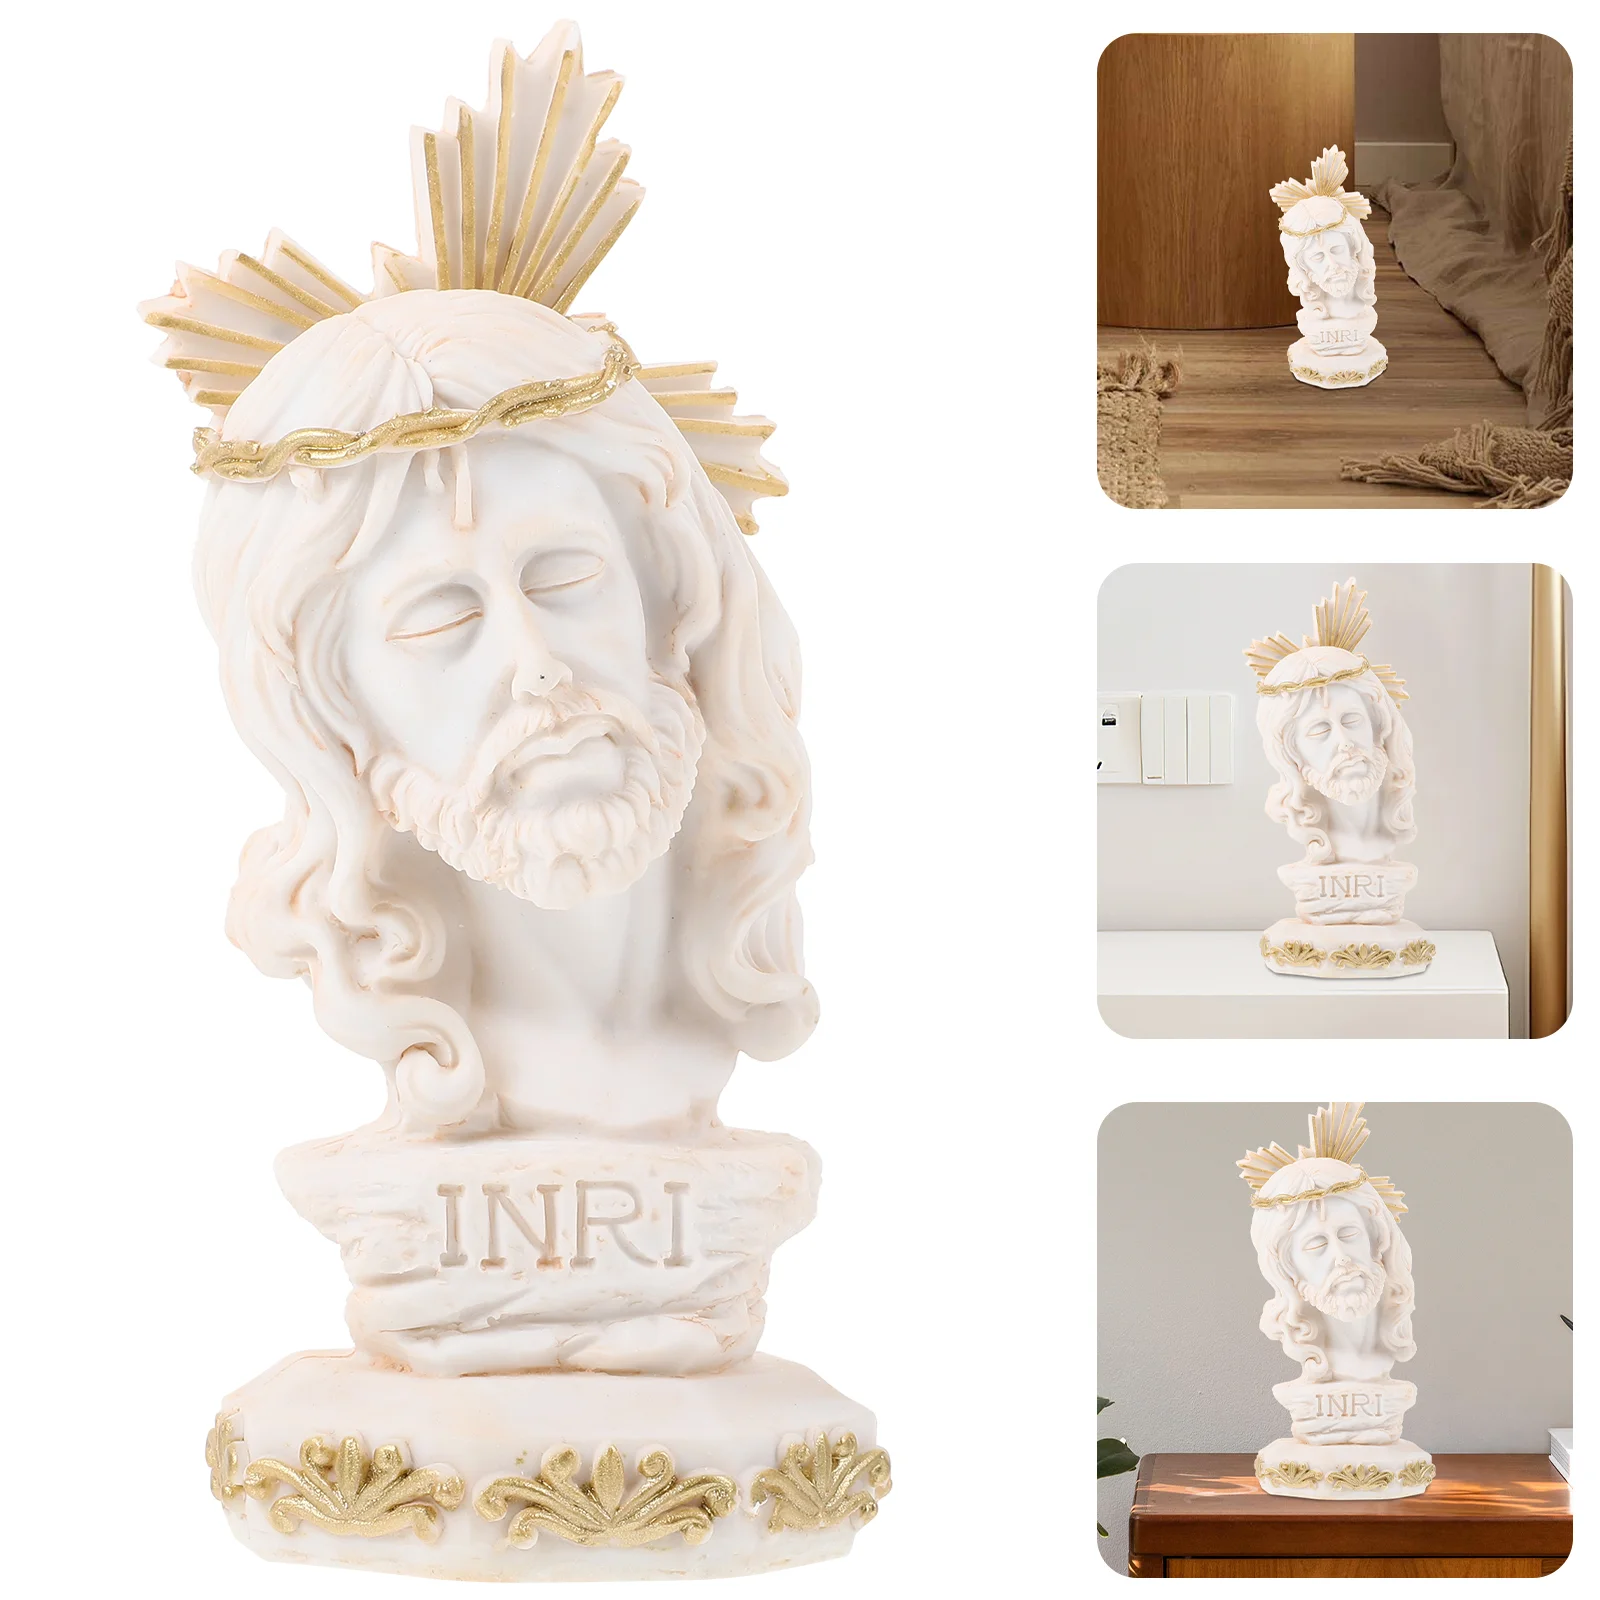 

Home Decor Church Decorations Jesus Shaped Figurine Sculpture Desktop Resin Ornament God Statue